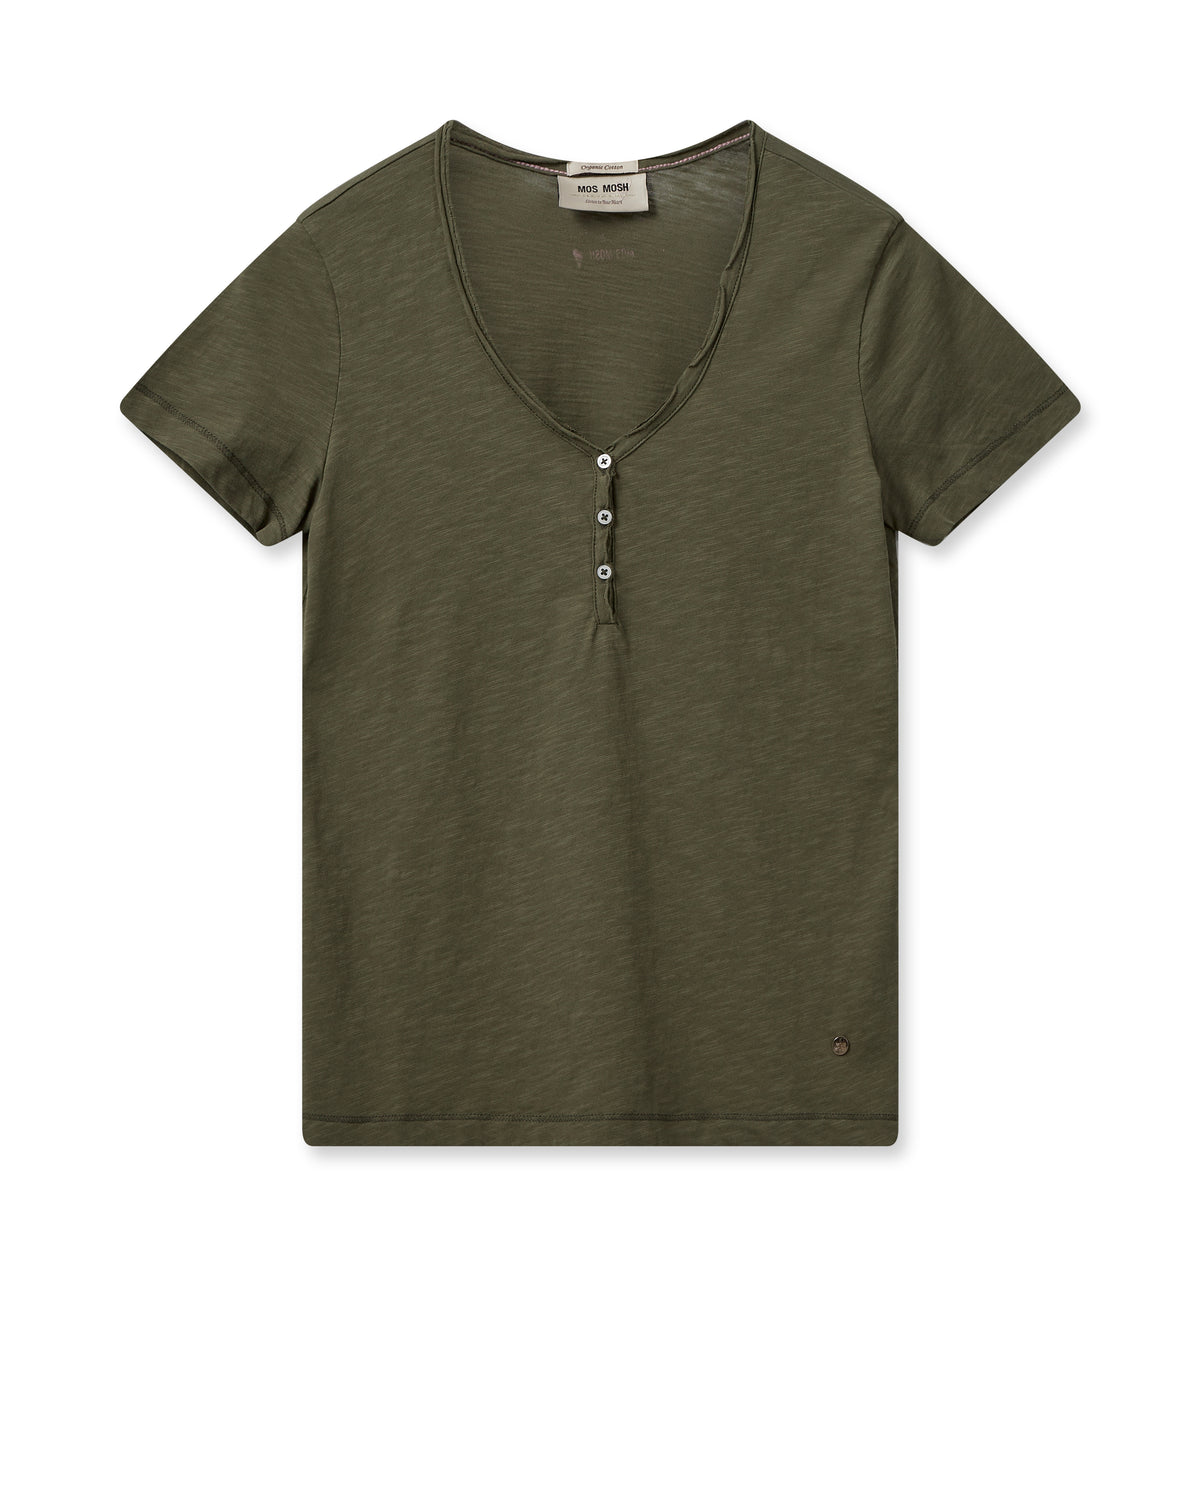 Khaki green cotton tee wiht v neck and three button fastening